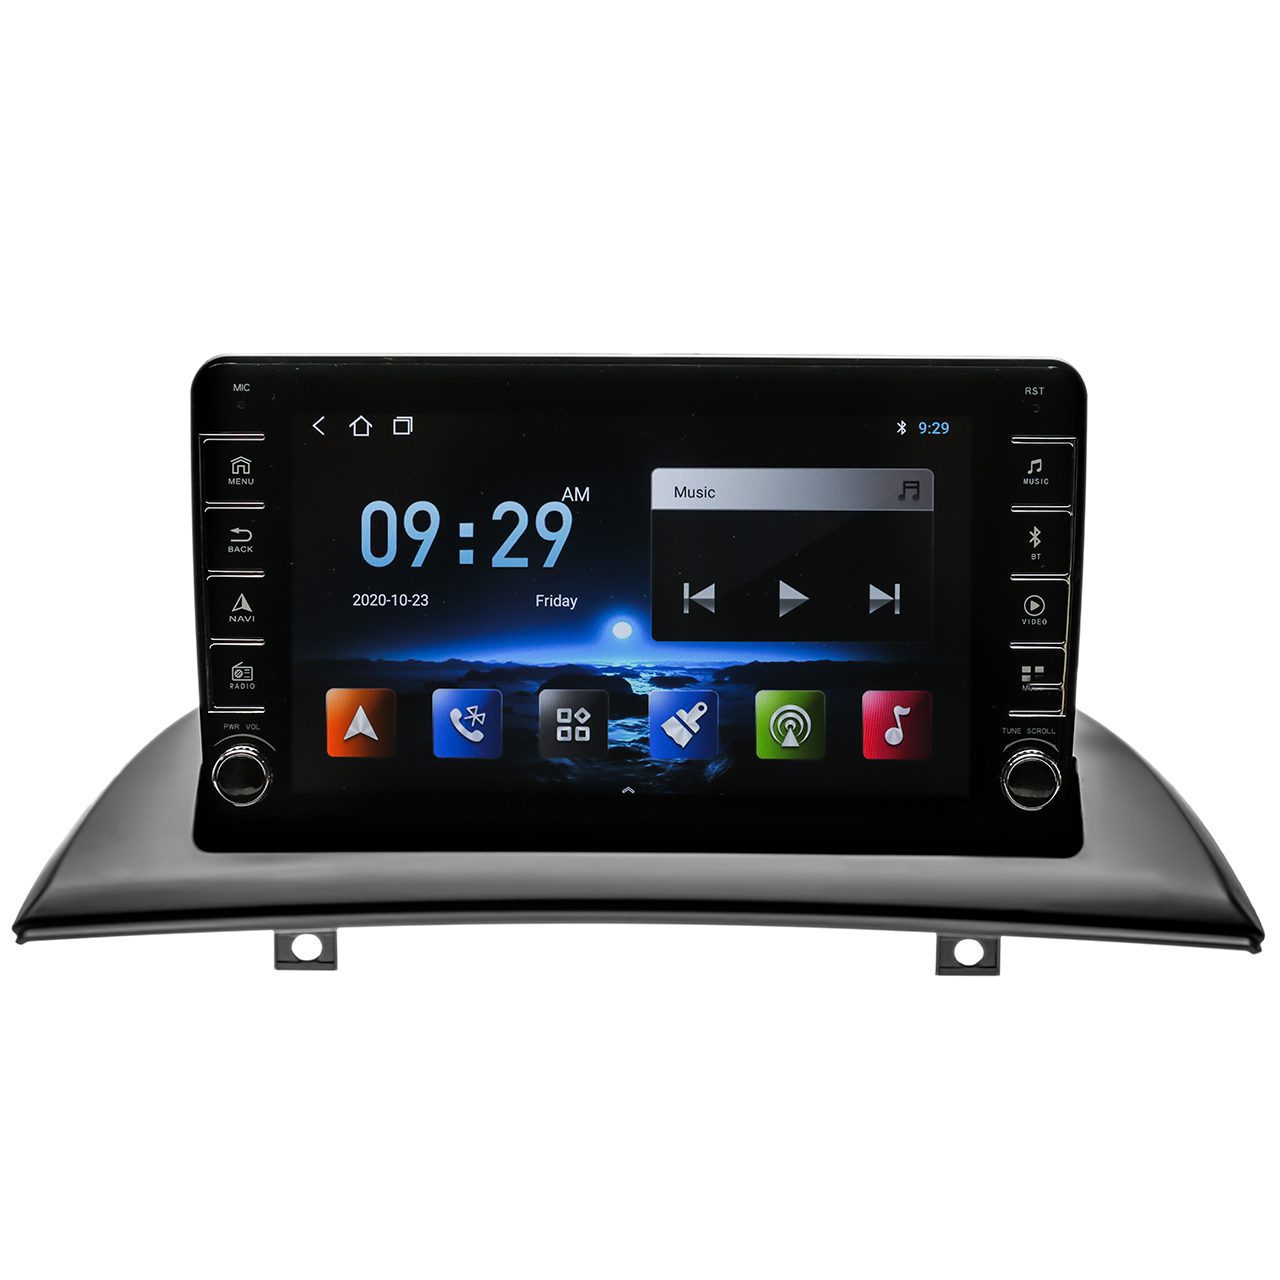 Navigatie AUTONAV Android GPS Dedicata BMW X3 E83, Model PRO Memorie 128GB Stocare, 6GB DDR3 RAM, Butoane Laterale Si Regulator Volum, Display 8